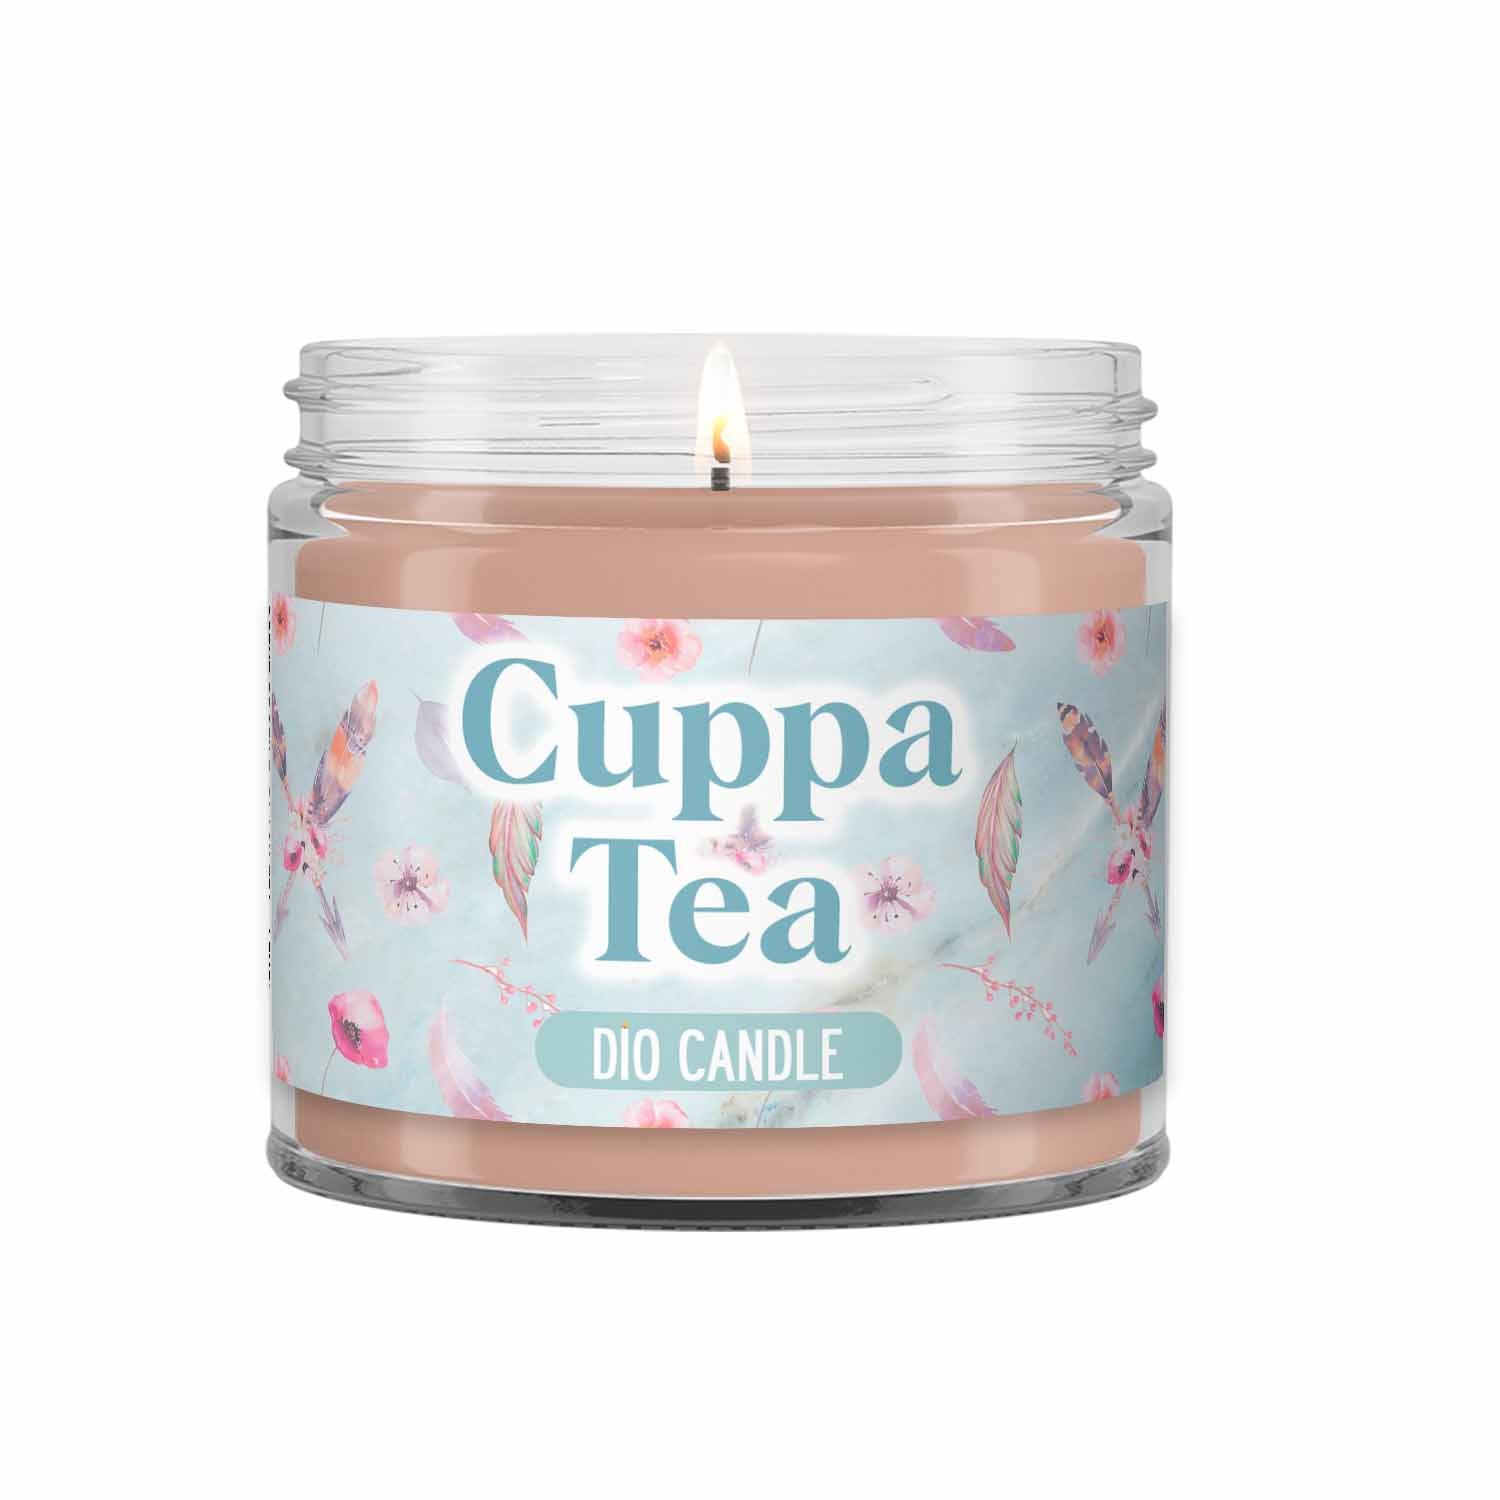 Cuppa Tea Candle